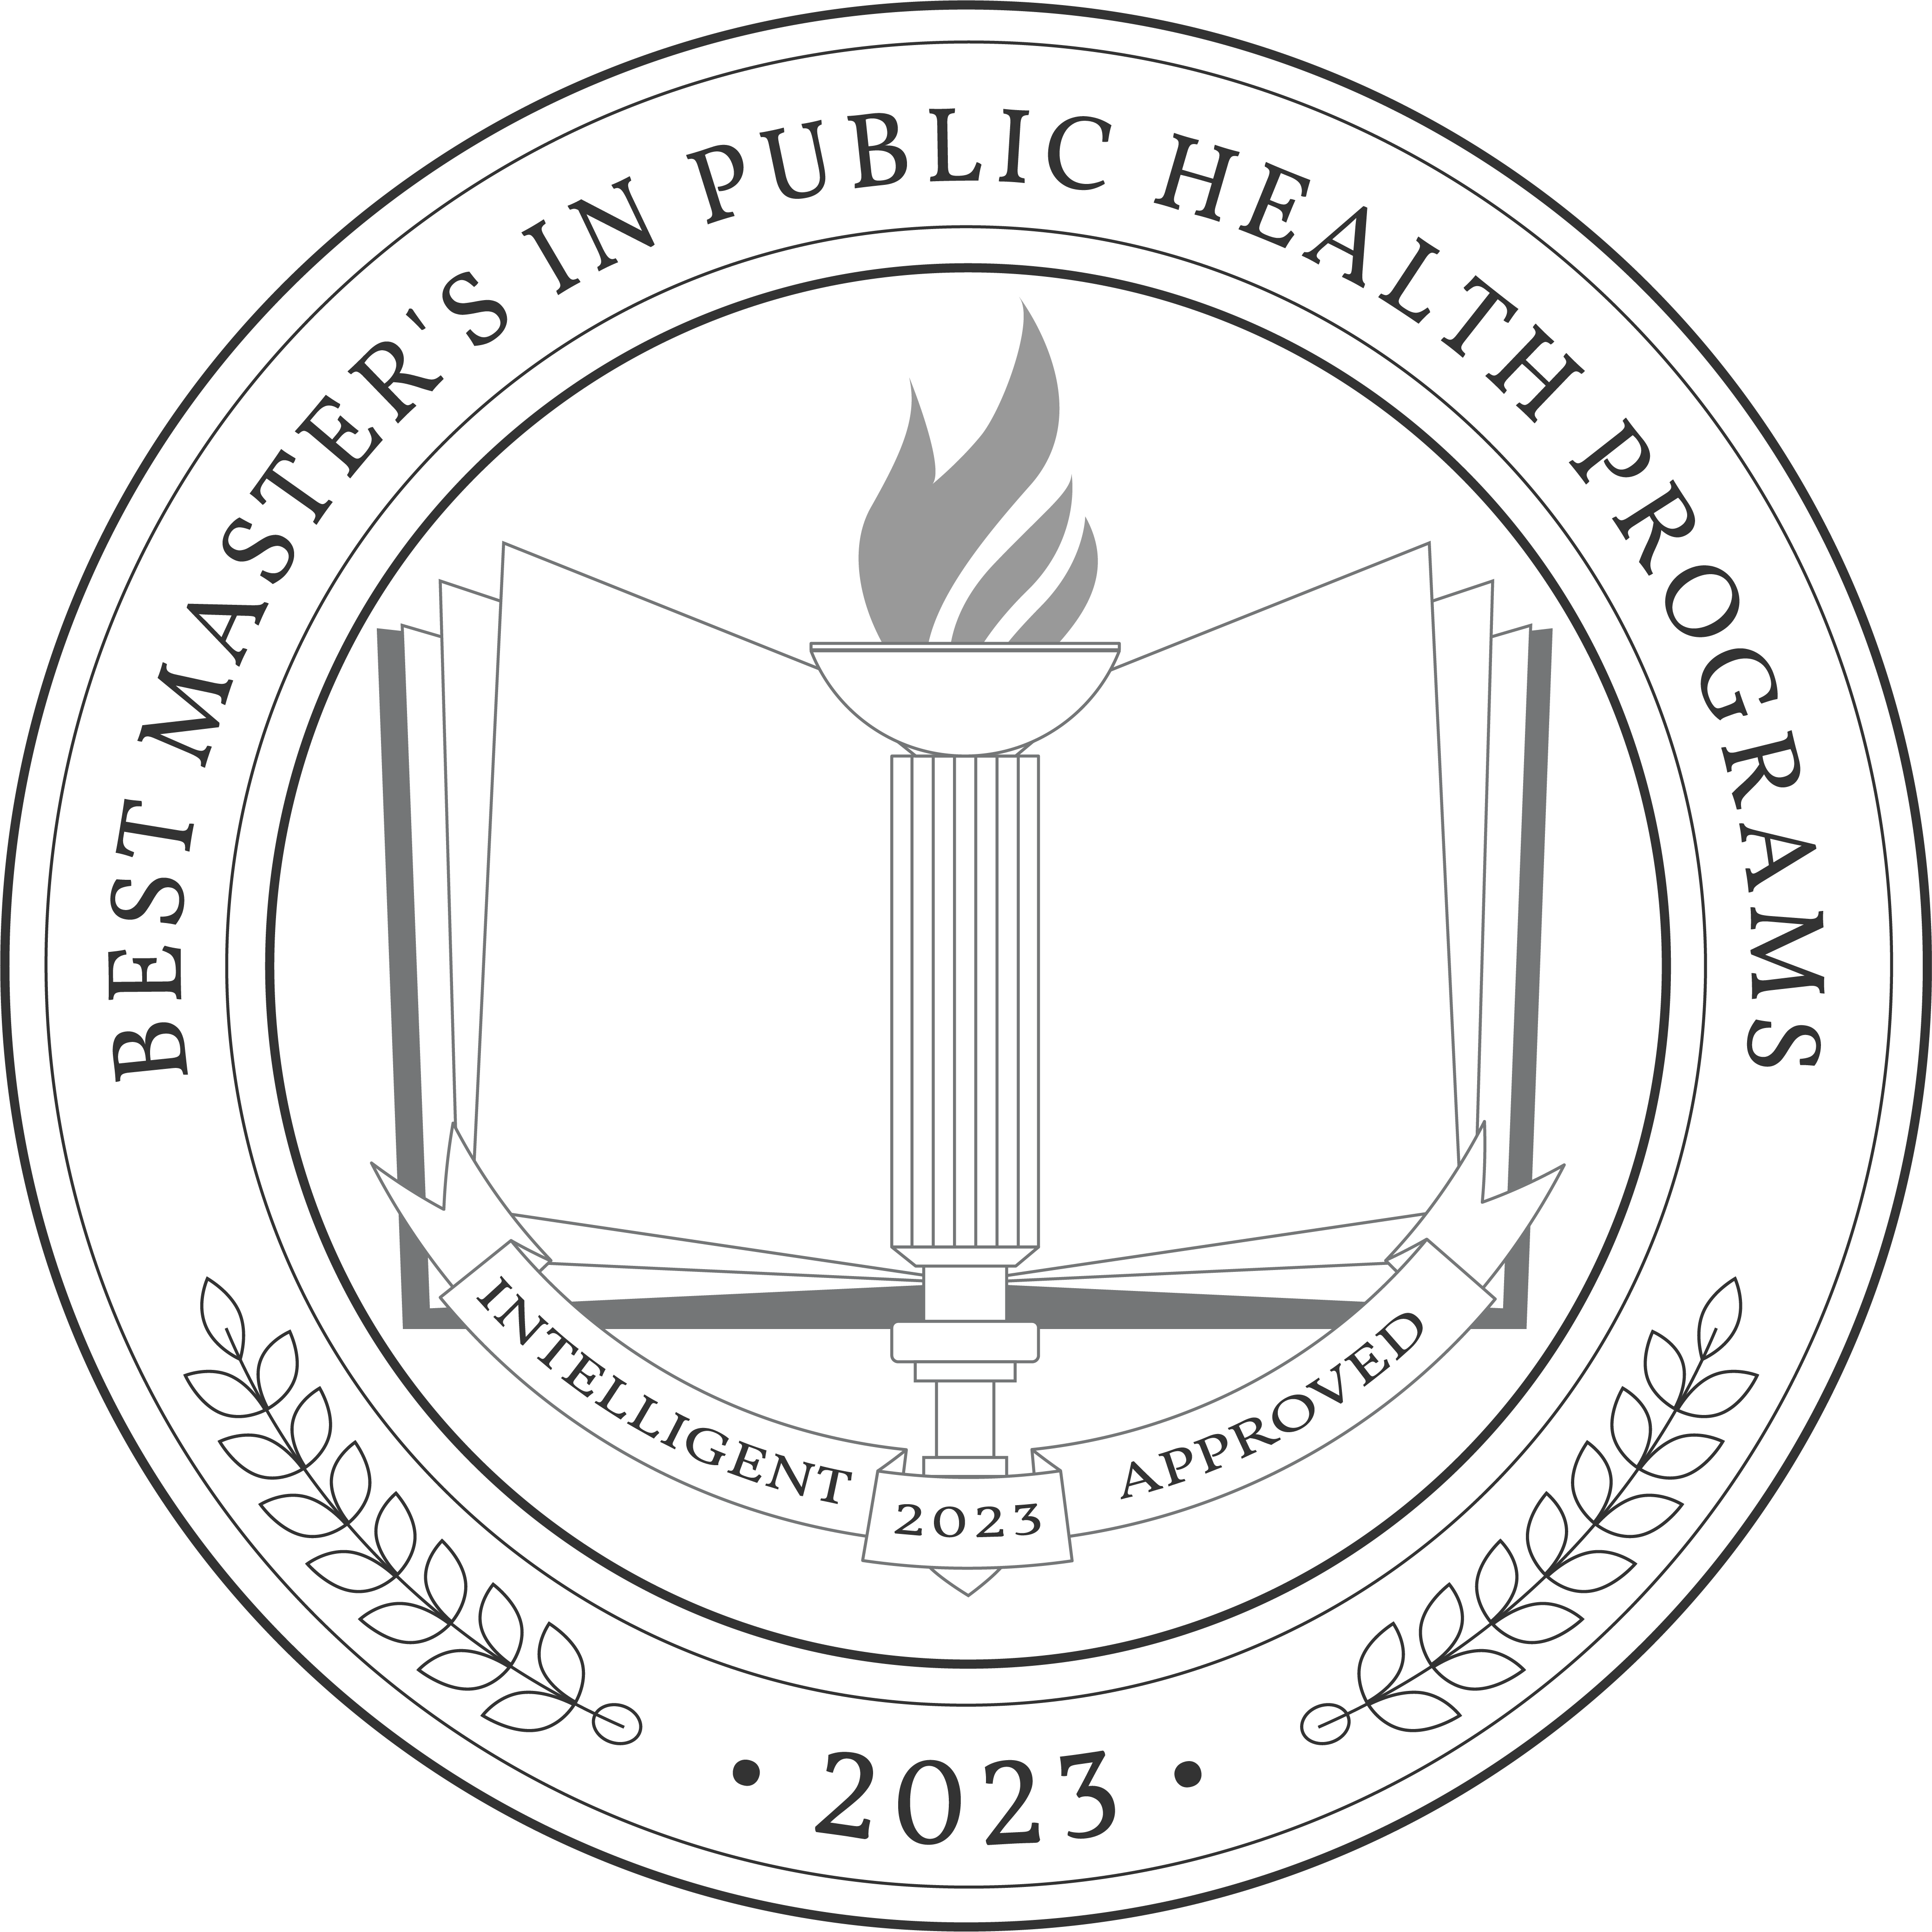 Best Master's in Public Health Programs 2023